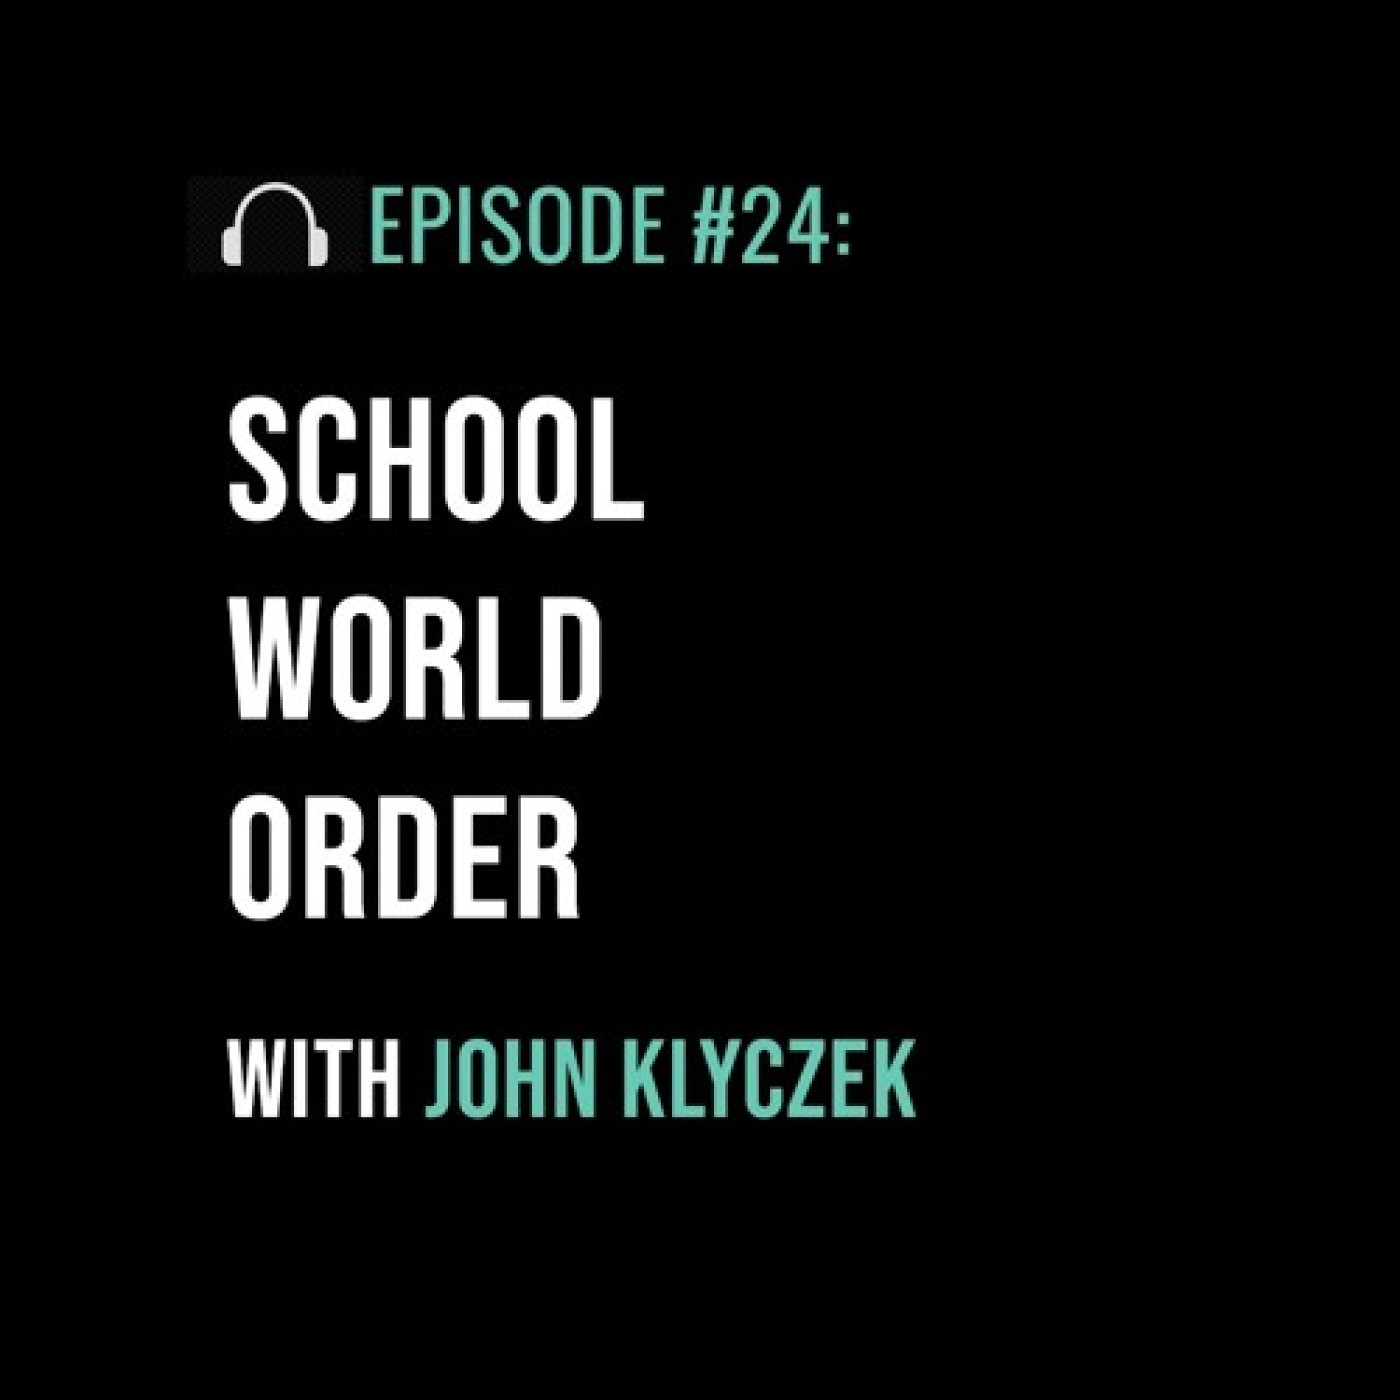 School World Order with John Klyczek